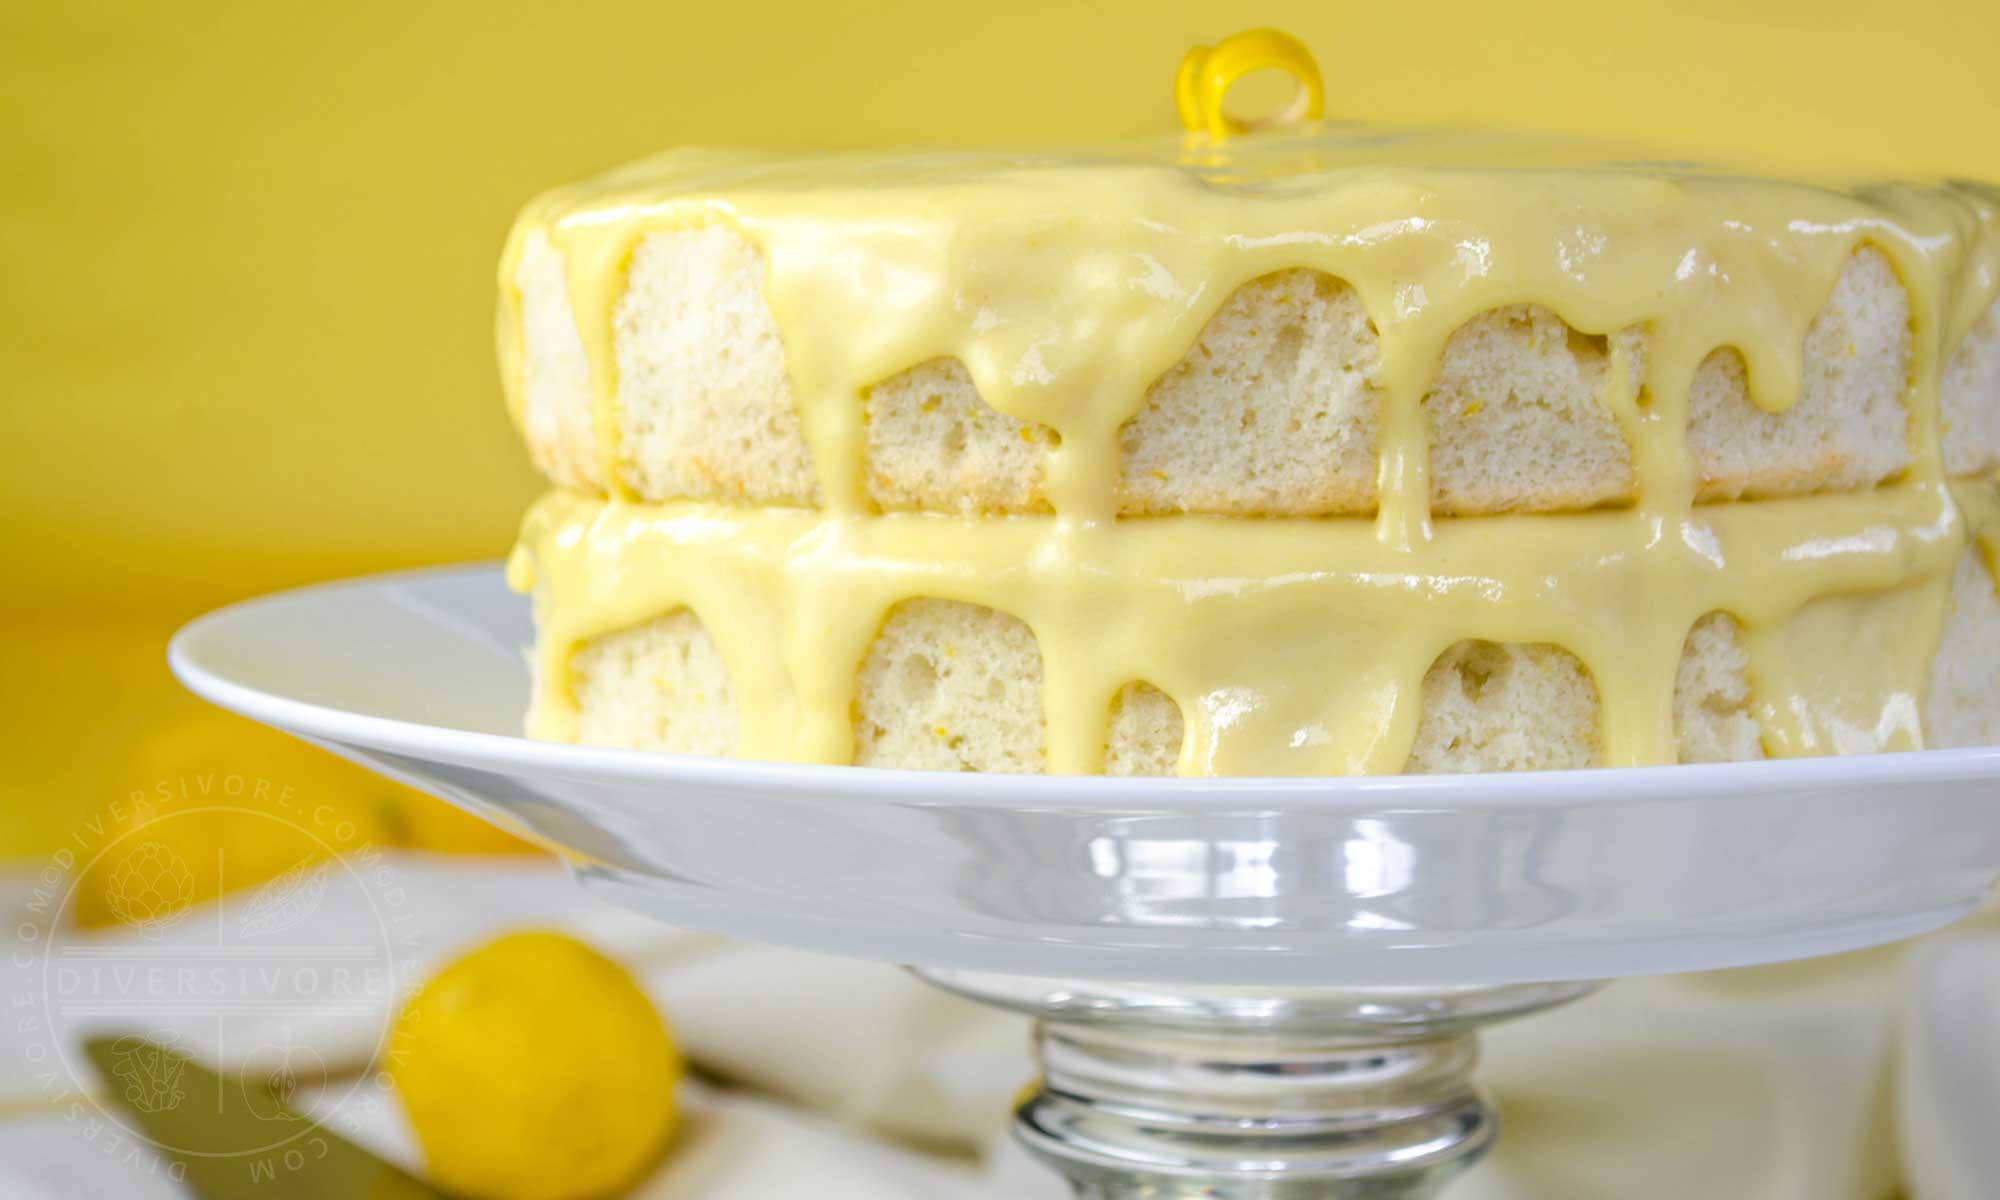 Lemon Whip Cake with Dairy-Free Lemon Curd, shown on a raised cake platter